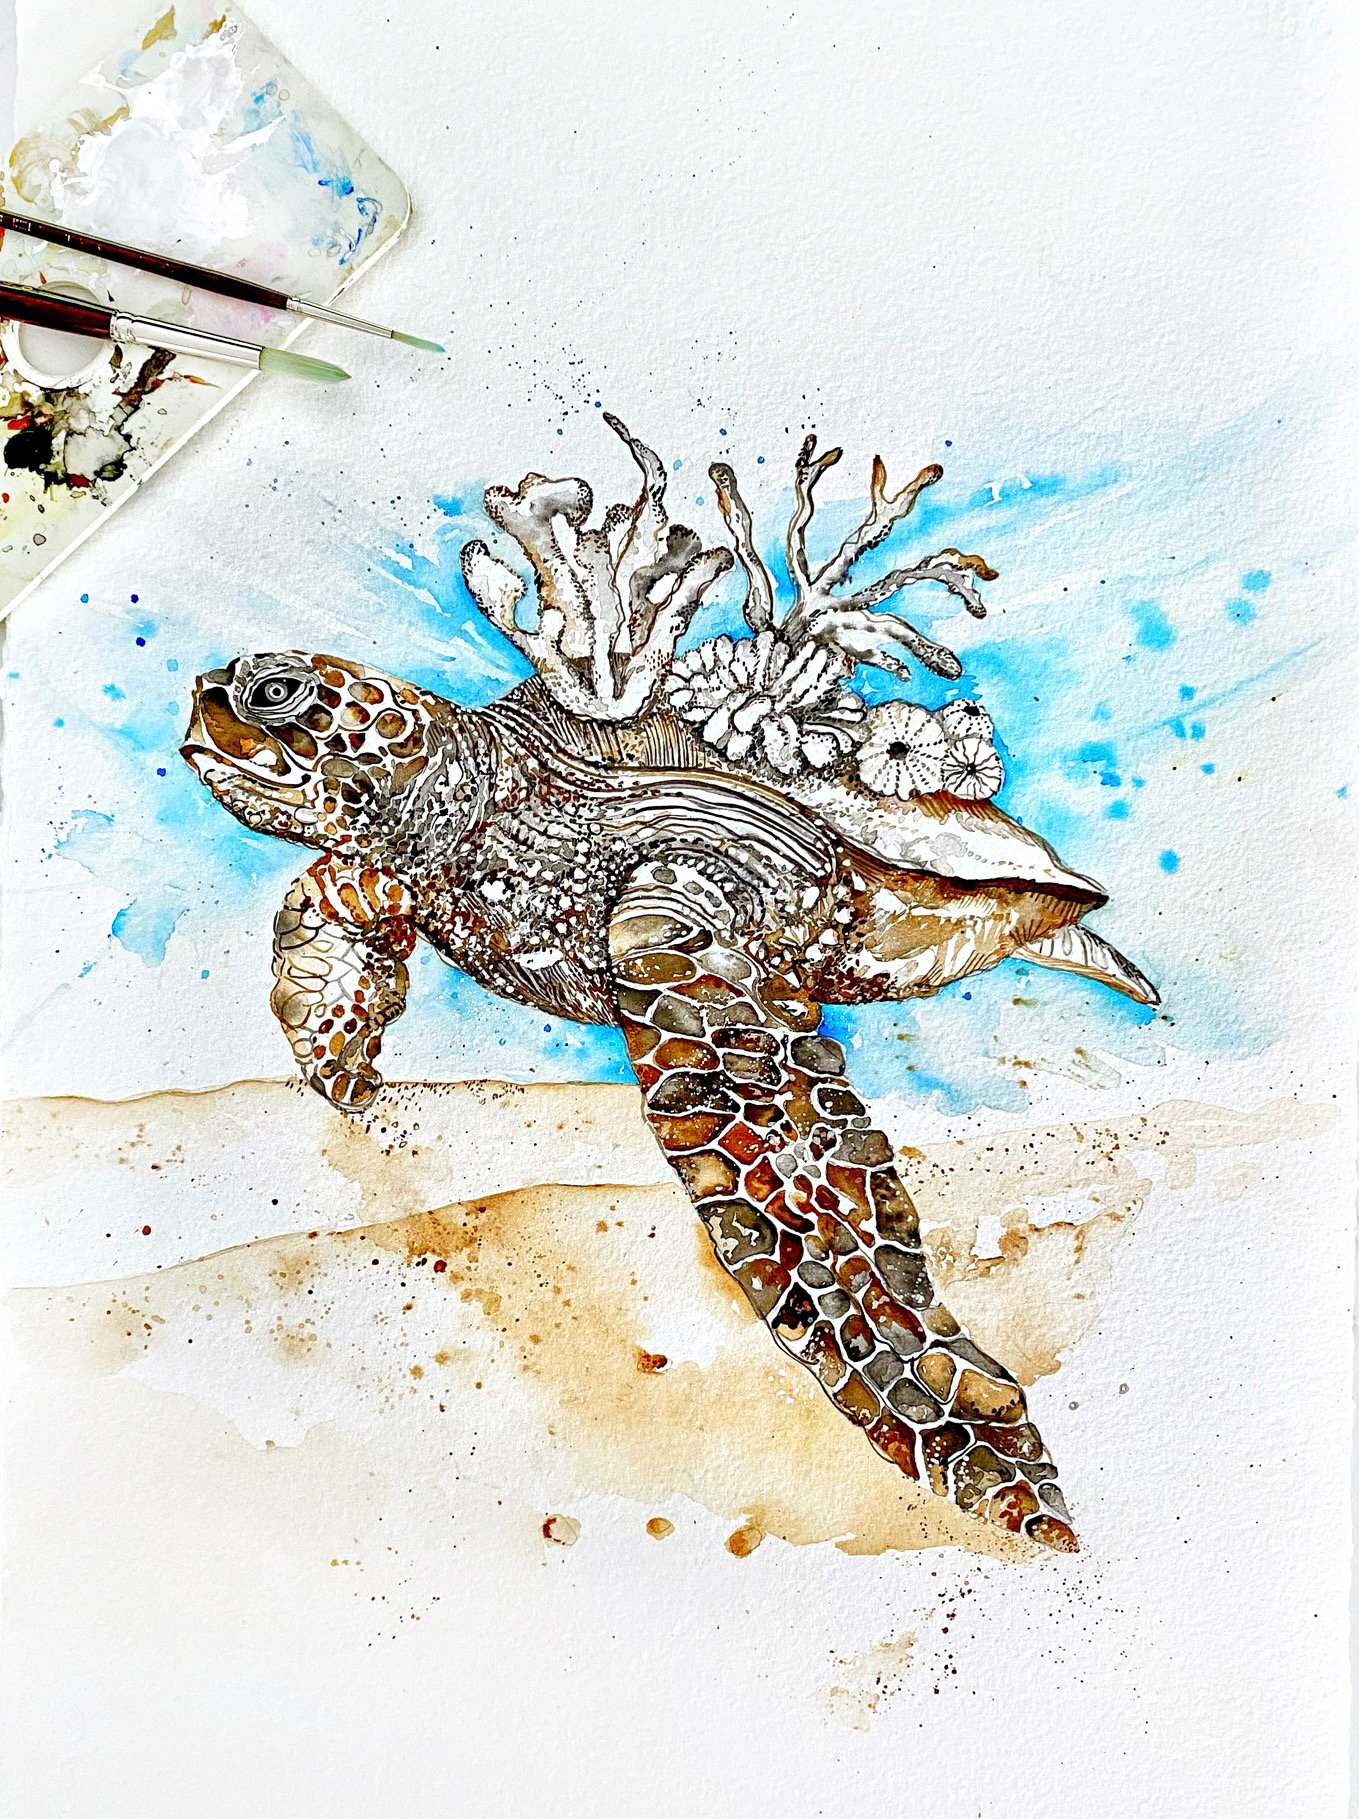 Image of Douglas the sea turtle